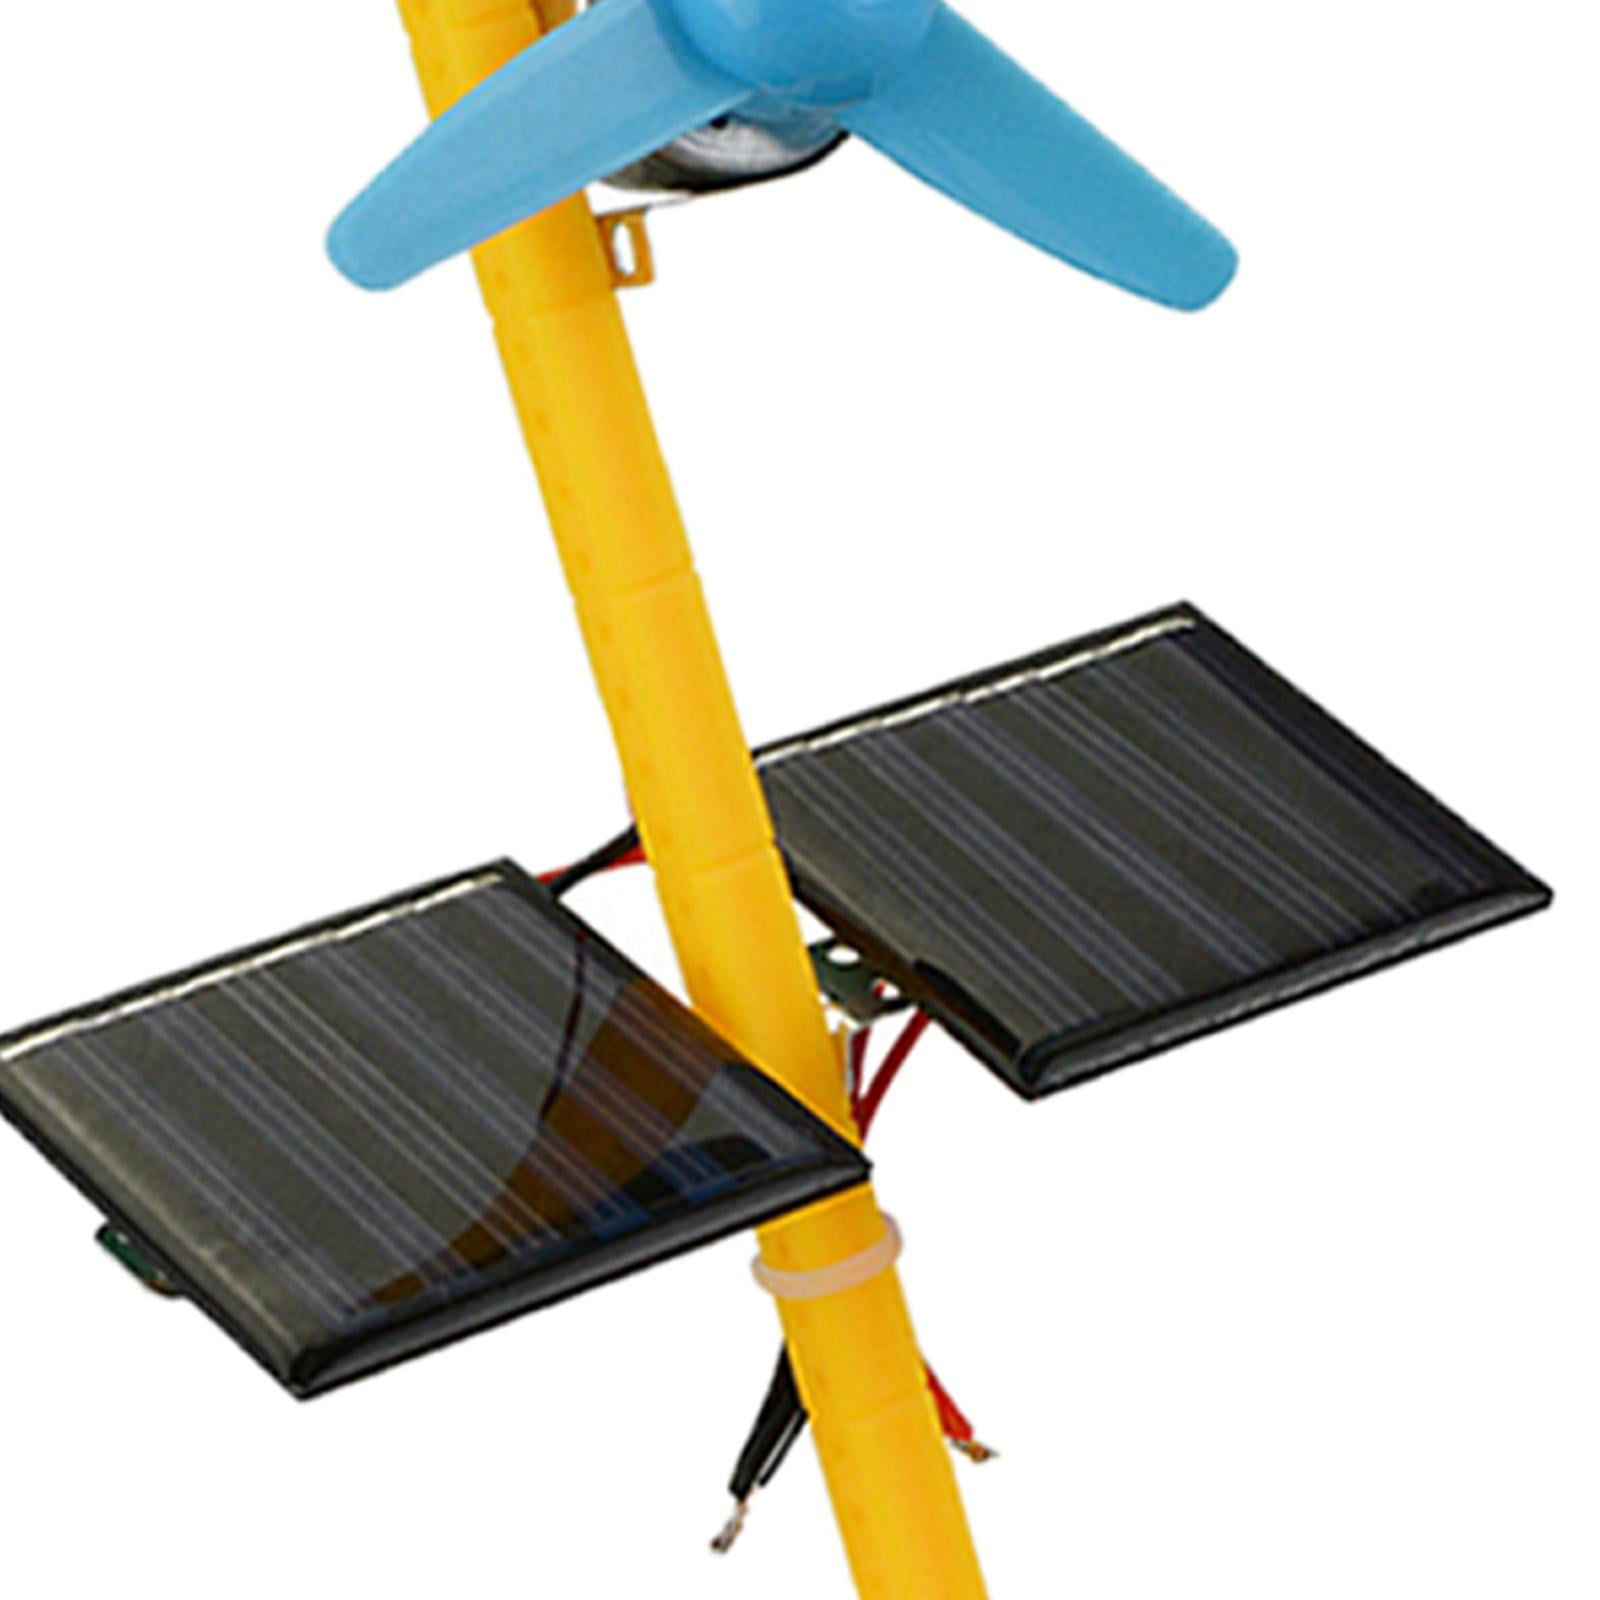 Baoblaze DIY Solar Power Generator DC Motor Fan Solar Toy For Science Education Model 